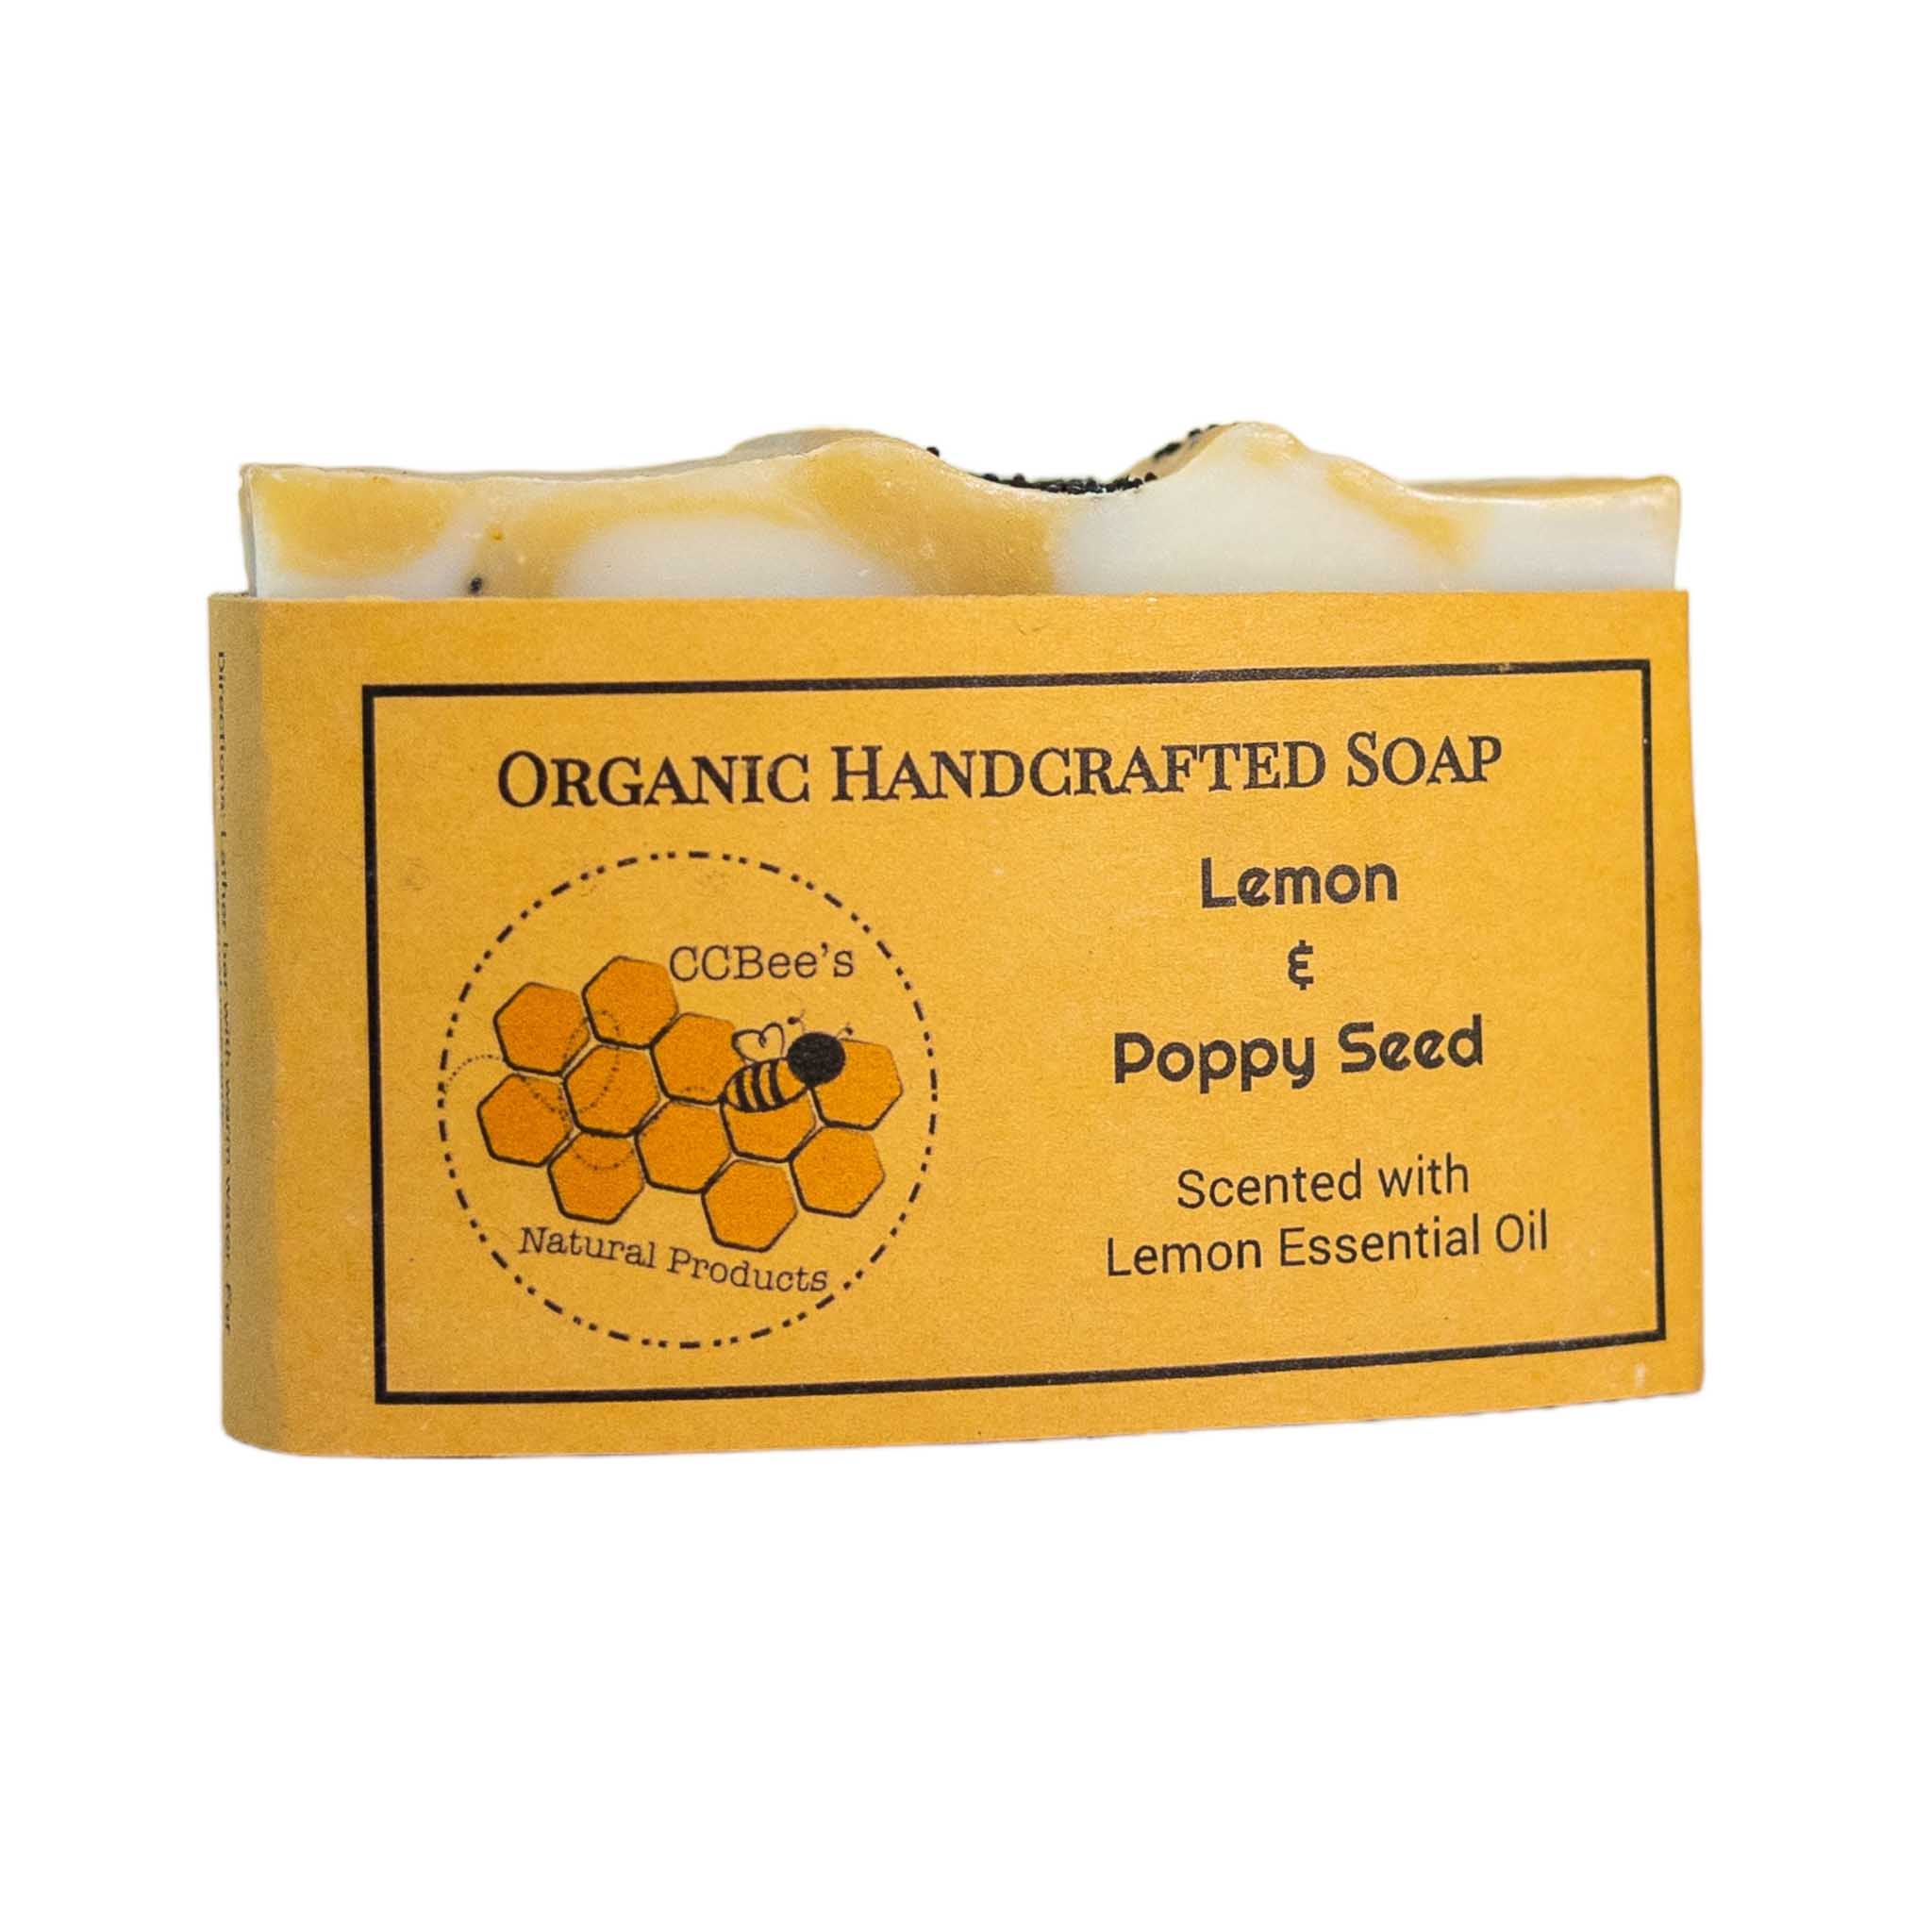 CCBees' Lemon & Poppy Seed Soap